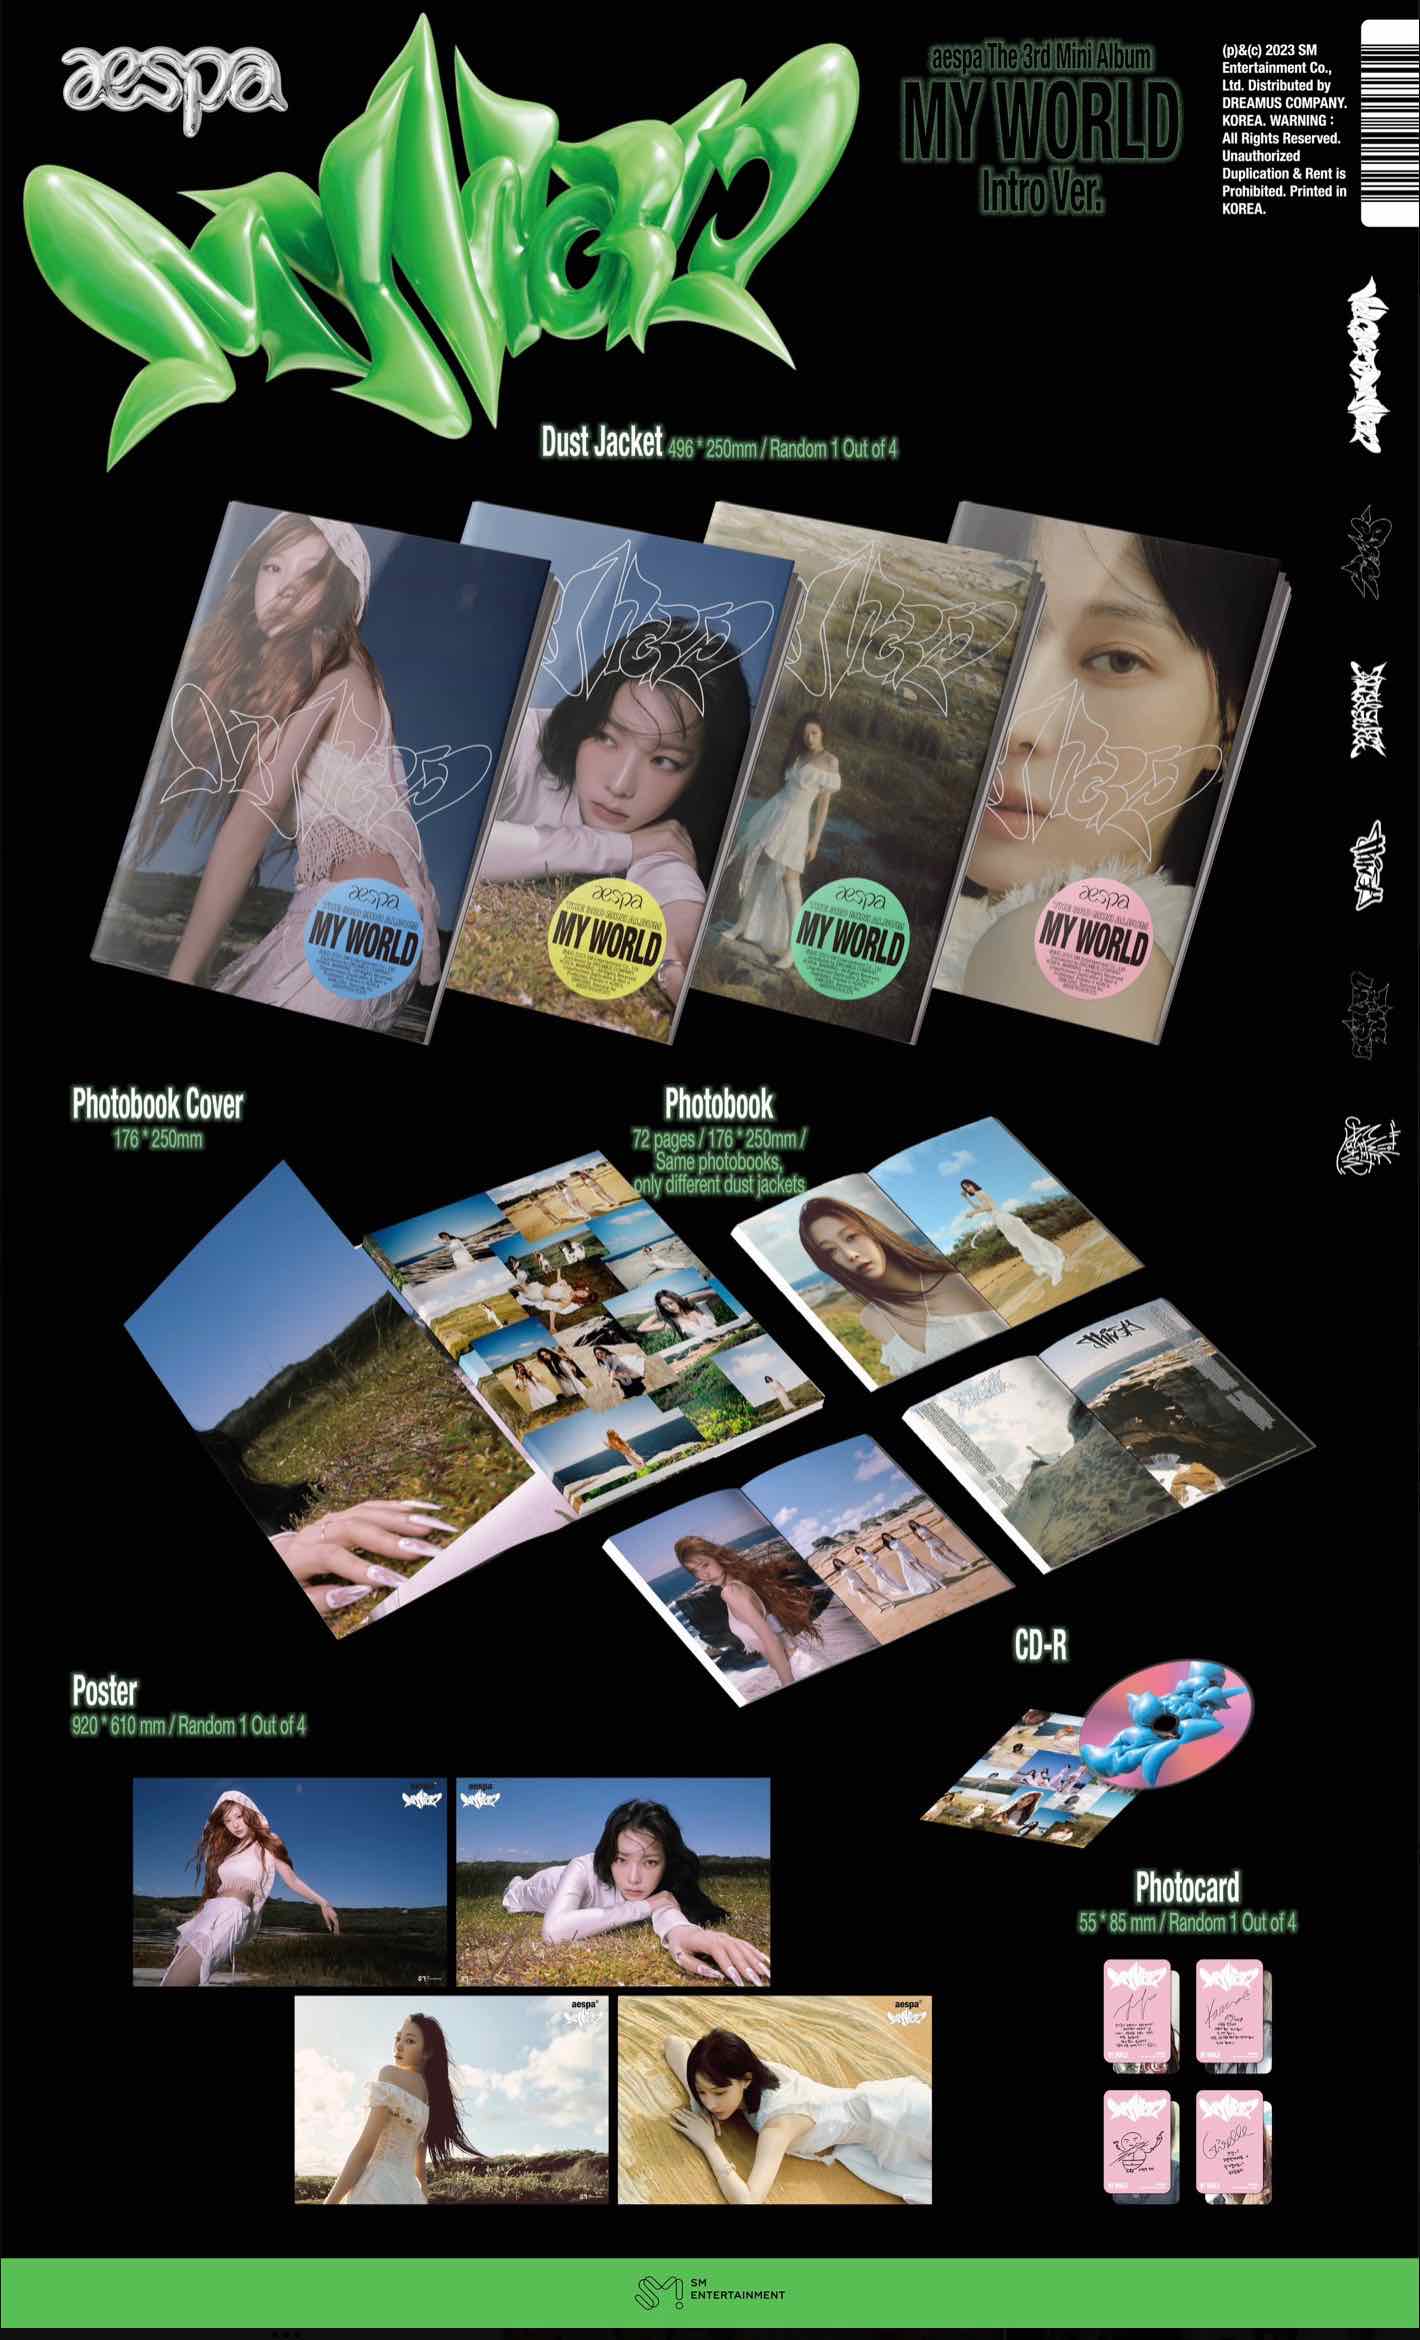 AESPA - MY WORLD 3RD MINI ALBUM INTRO Ver CD Korea record official album espa VERSION selection 